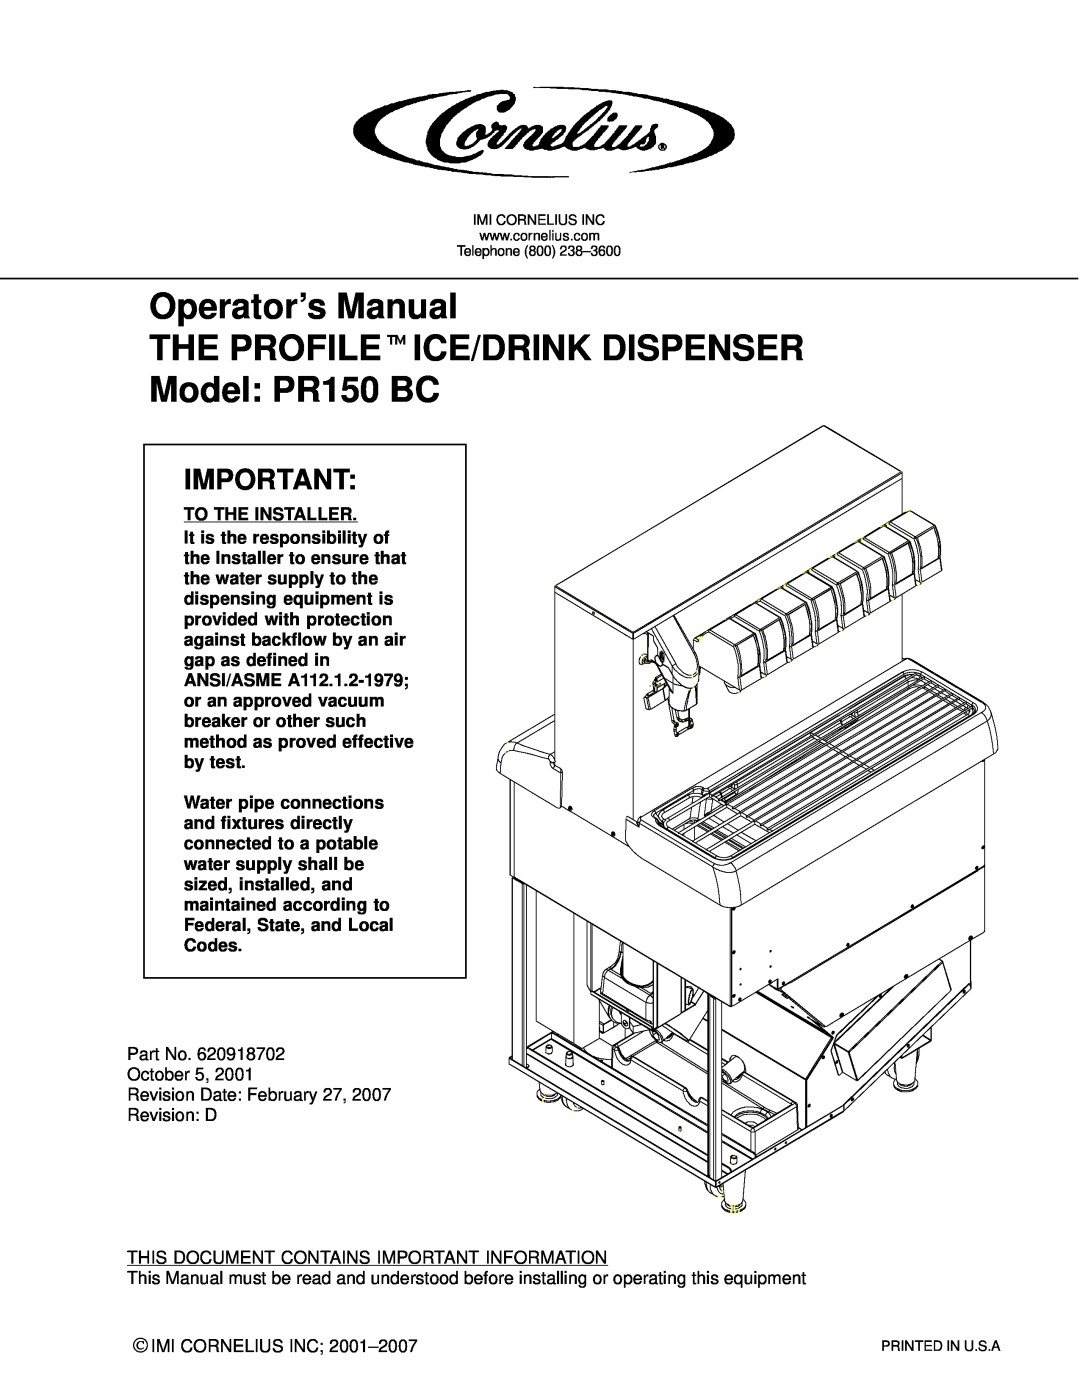 Cornelius manual Operator’s Manual THE PROFILEtICE/DRINK DISPENSER Model PR150 BC 